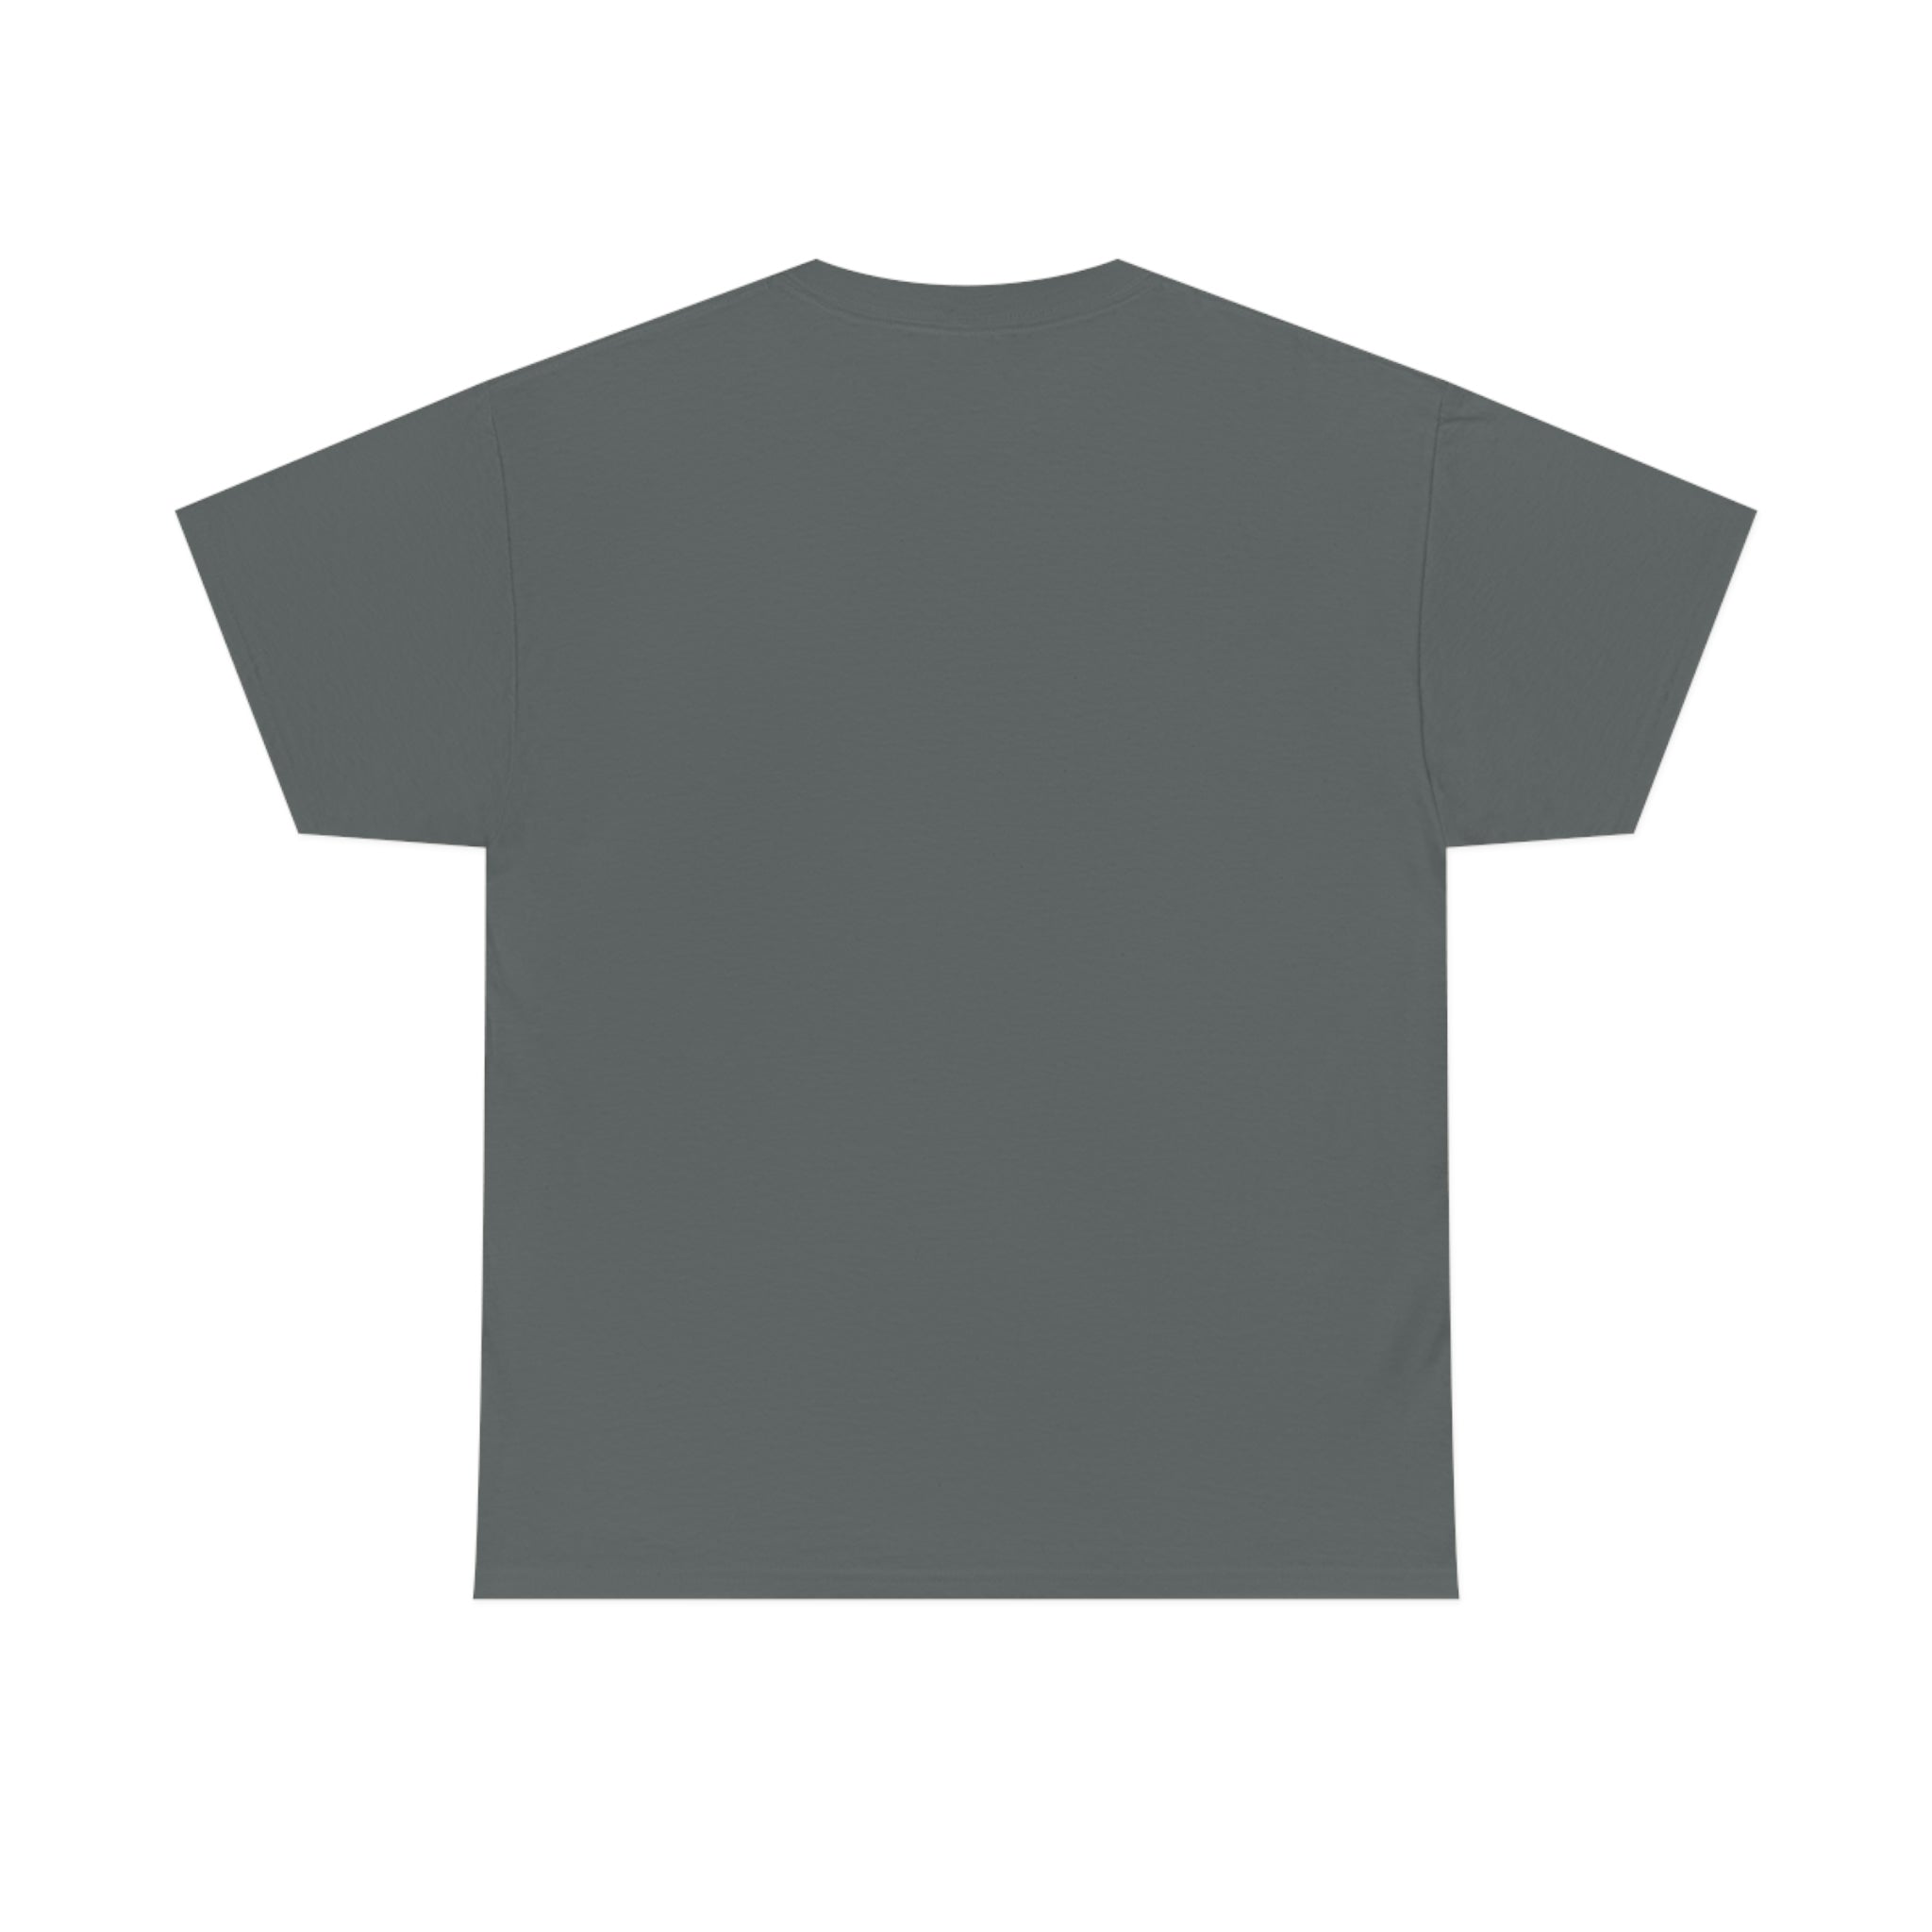 Rengoku Unisex T-Shirt